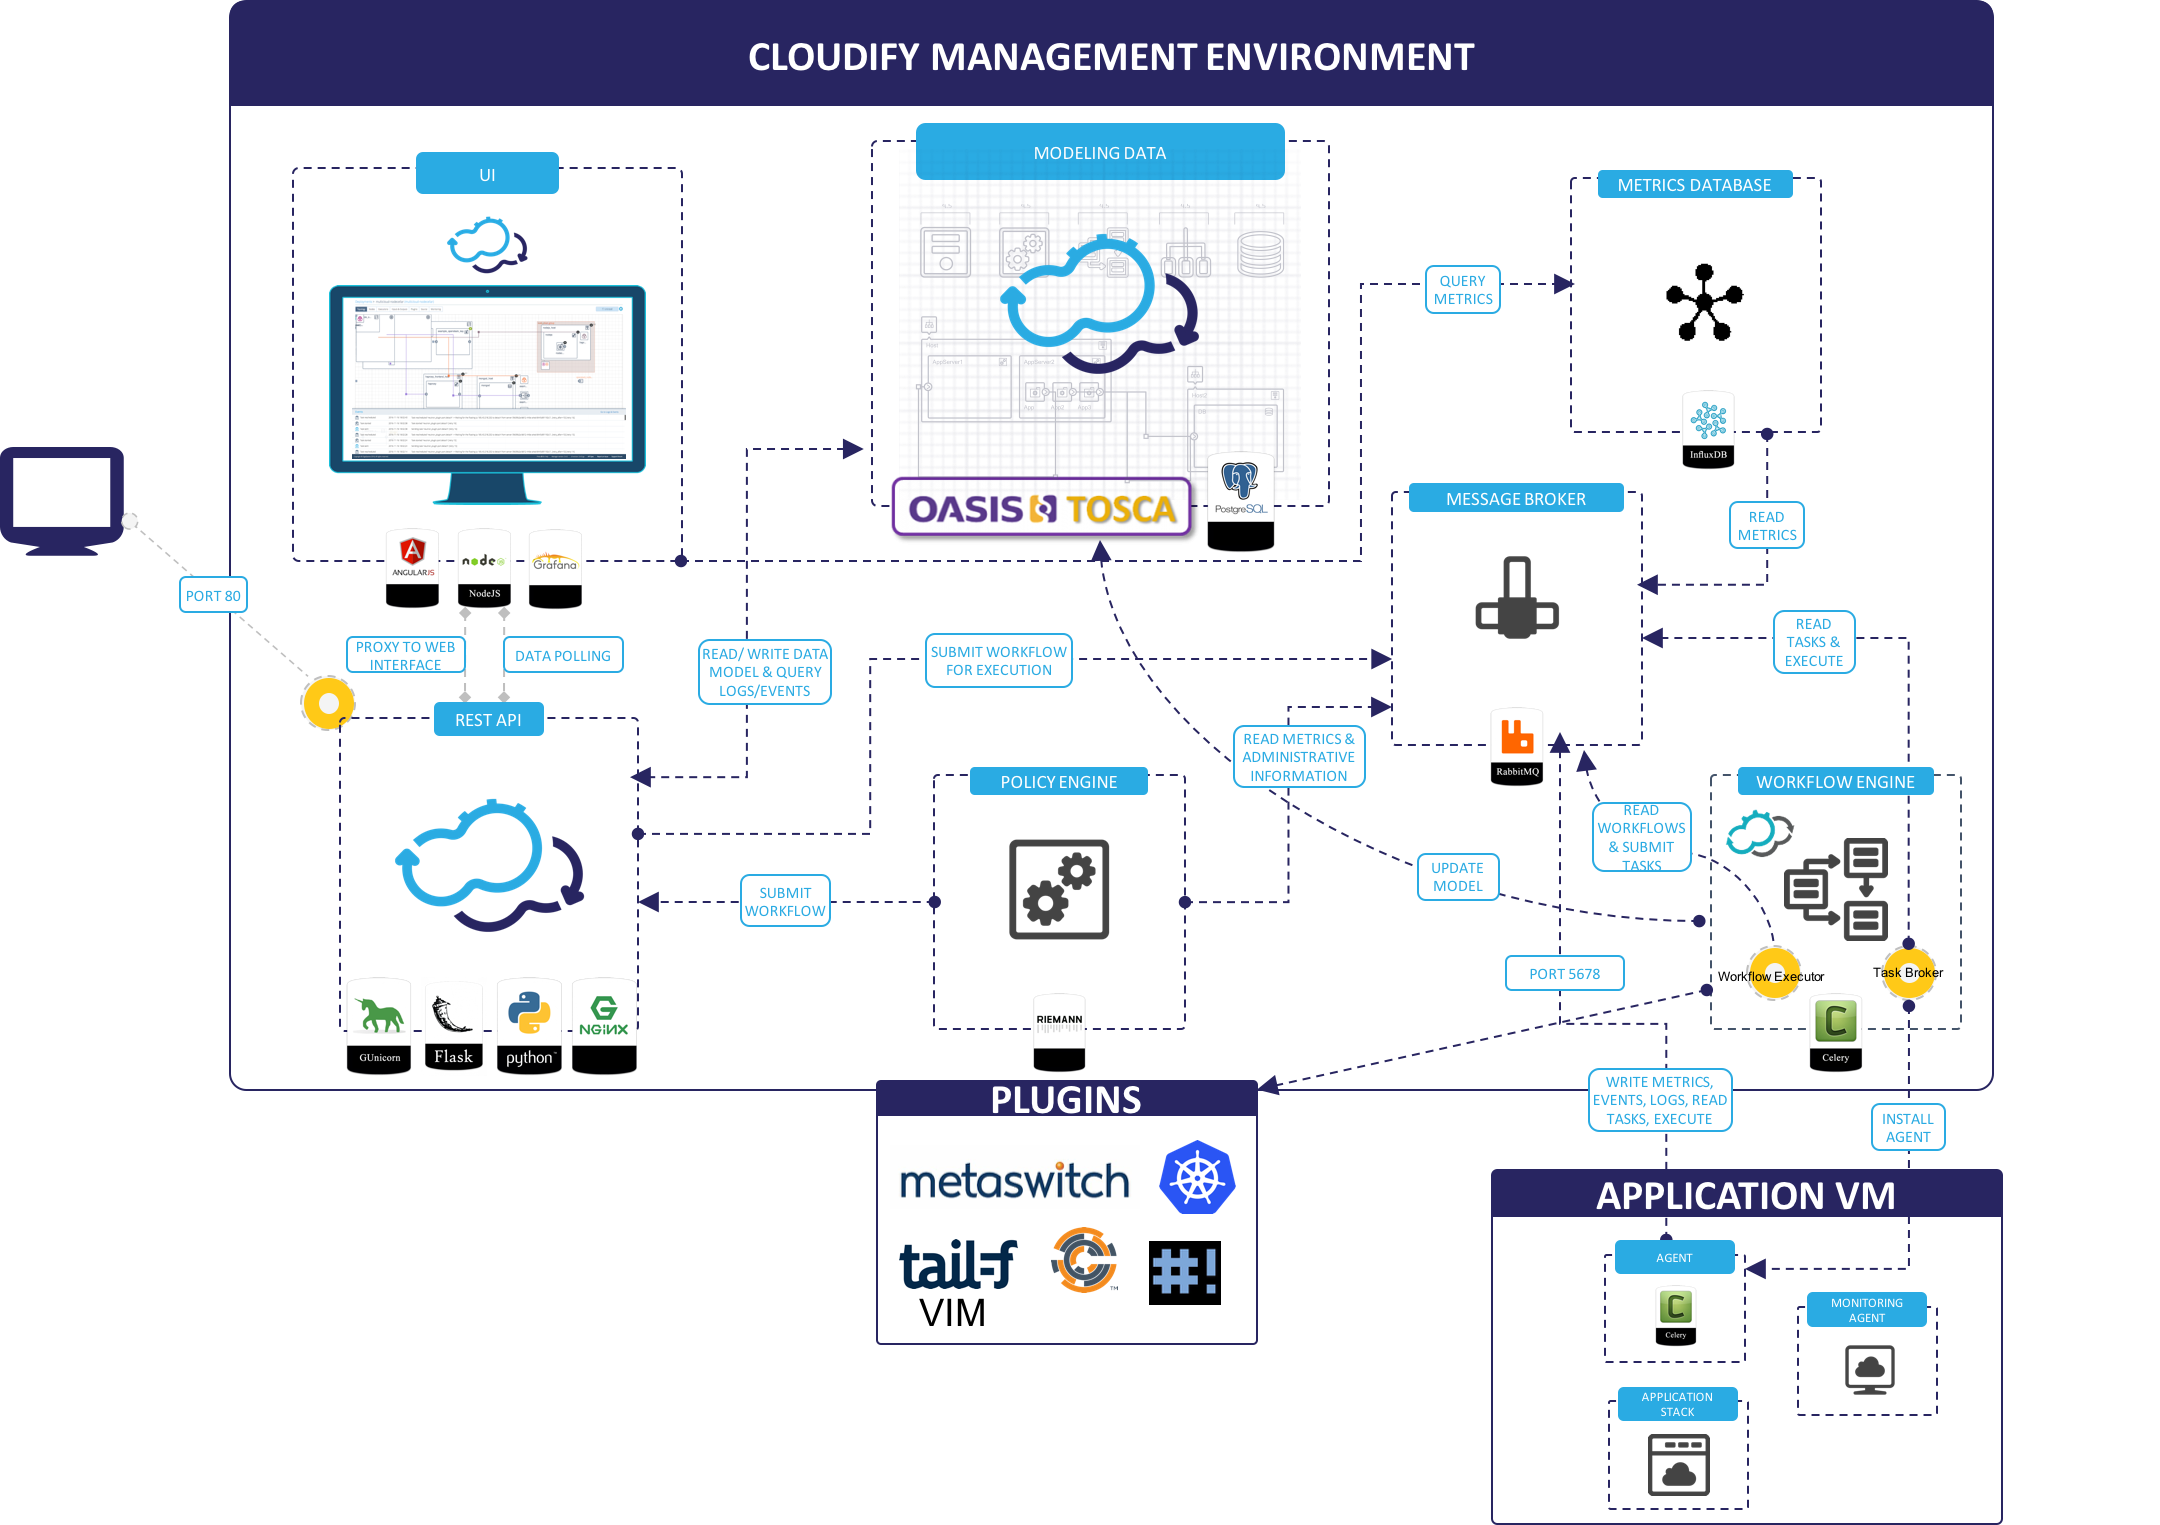 Cloudify components